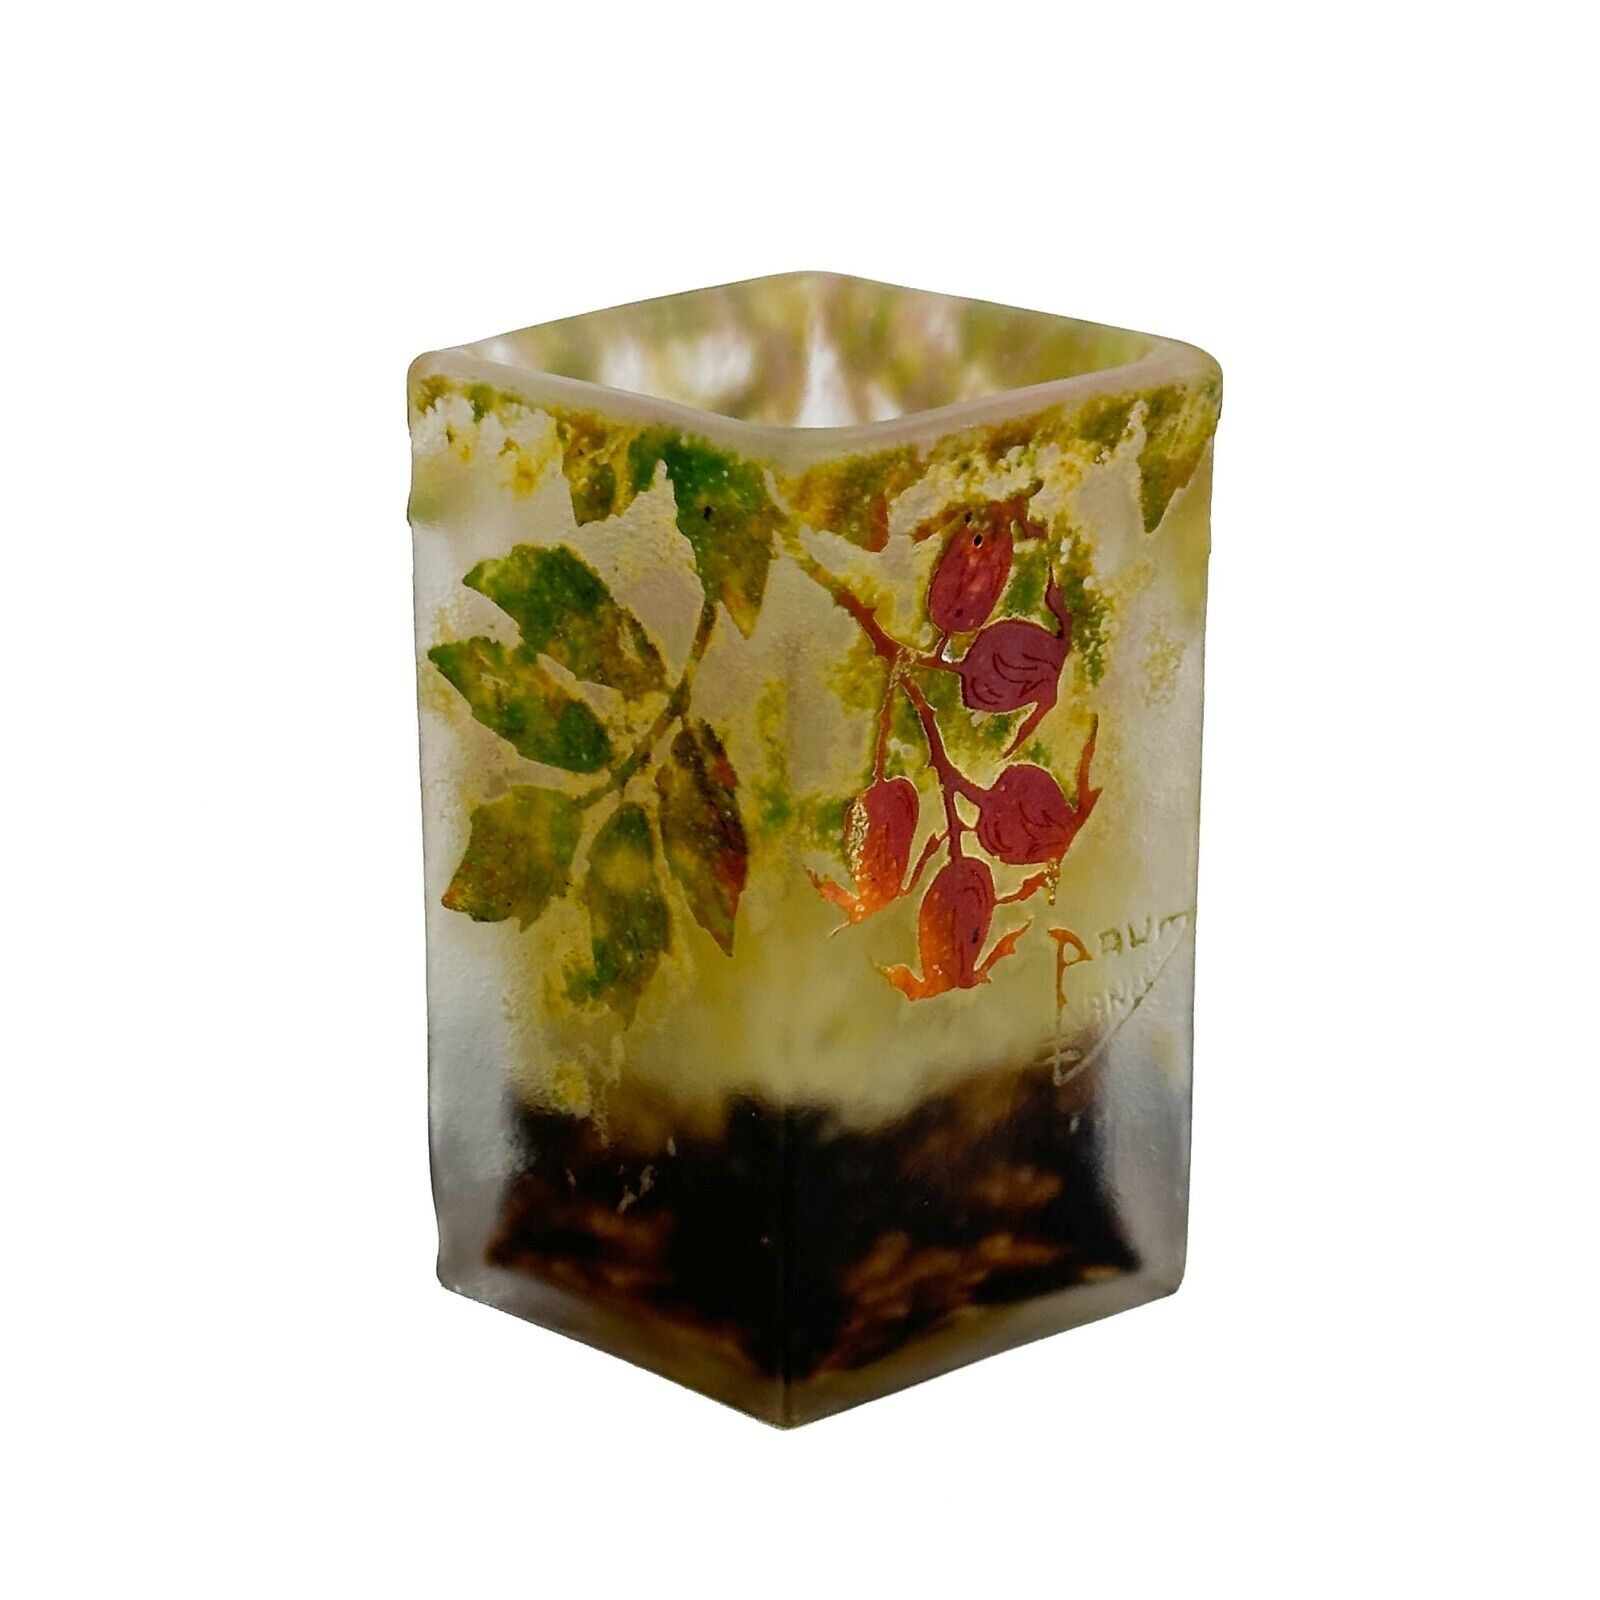 Daum Nancy France Acid Etched Cameo Vitrified Fire Polished Art Glass Vase c1900